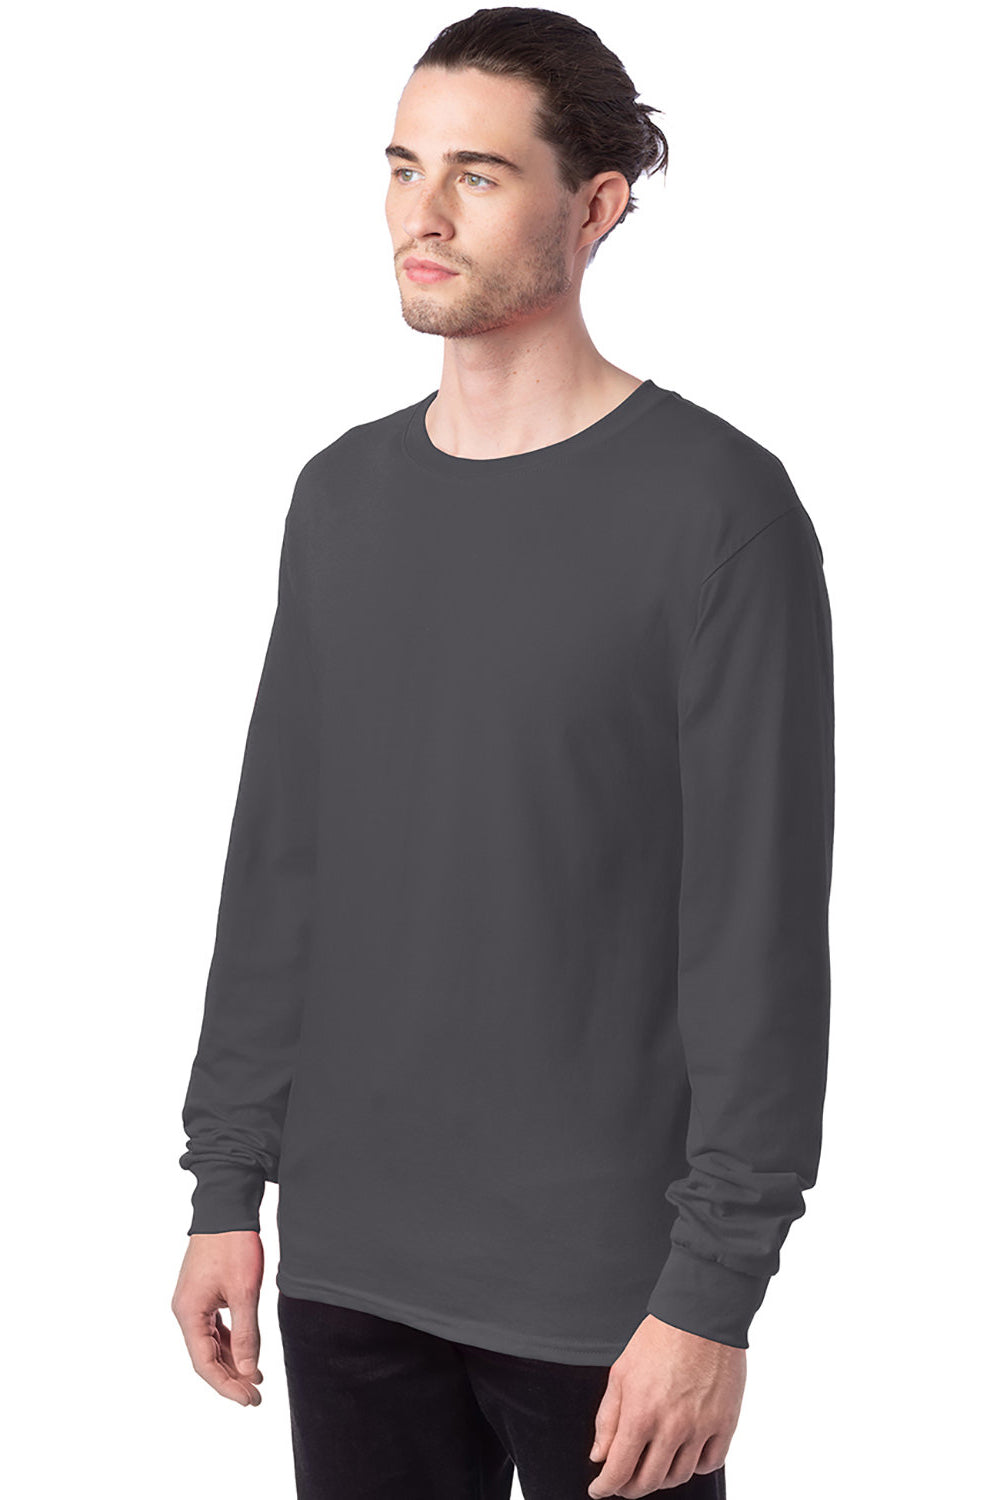 Hanes 5286 Mens ComfortSoft Long Sleeve Crewneck T-Shirt Smoke Grey 3Q